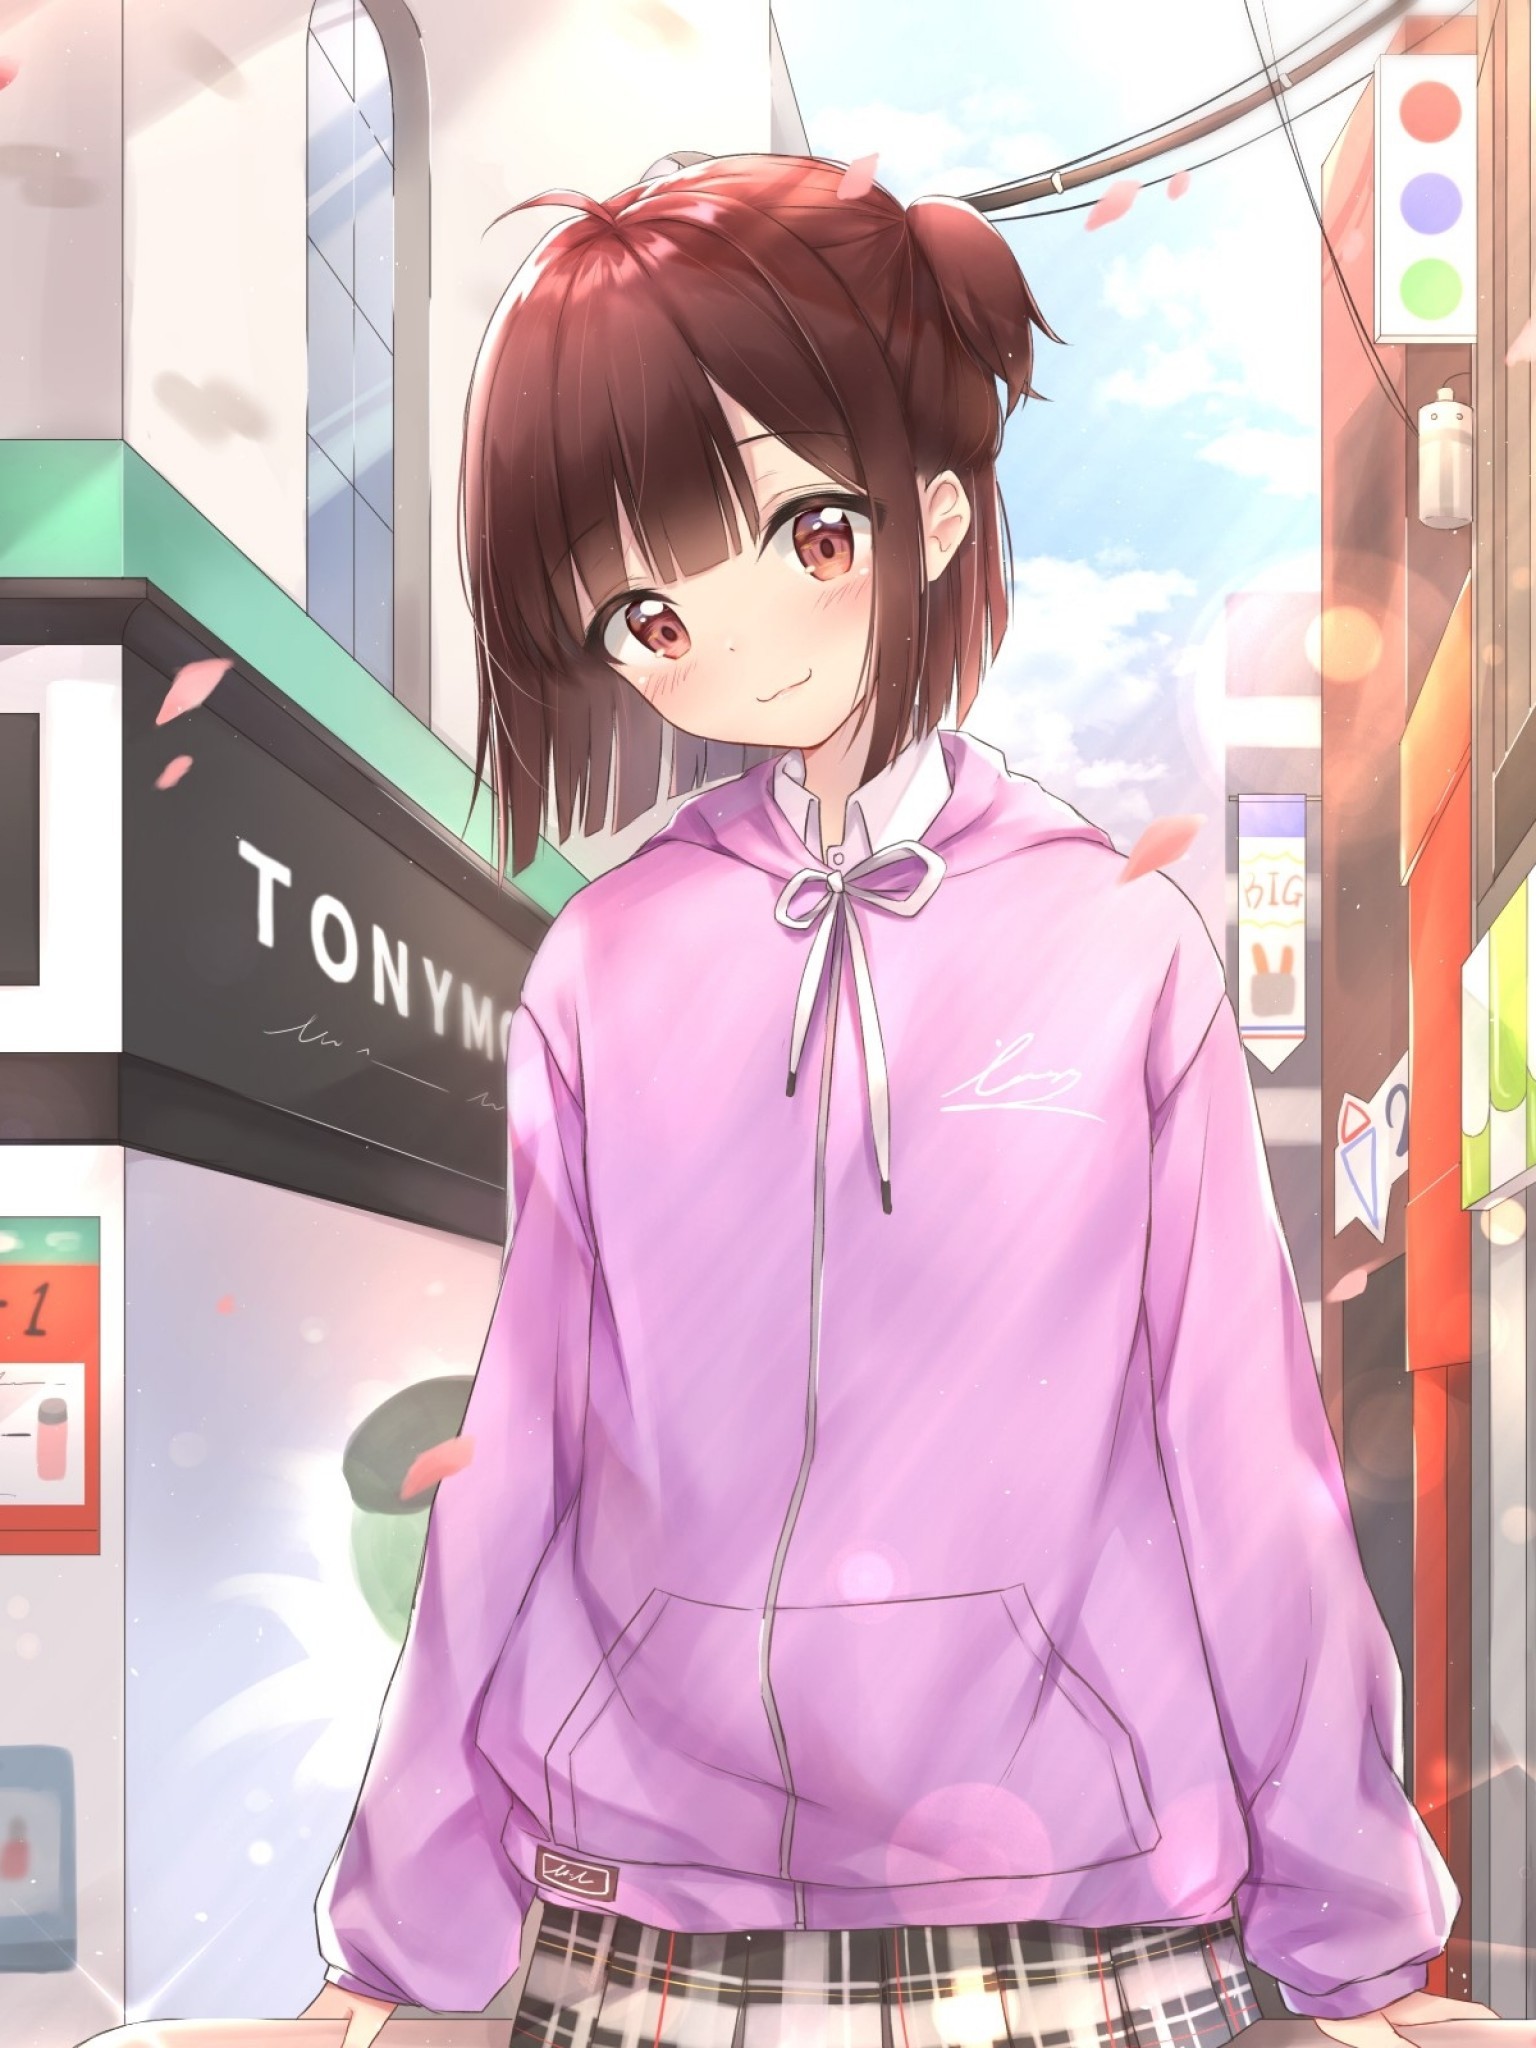 Download 1536x2048 Anime Girl, Sweater, Cute, Street, Short Hair Wallpaper for Apple iPad Mini, Apple IPad 4